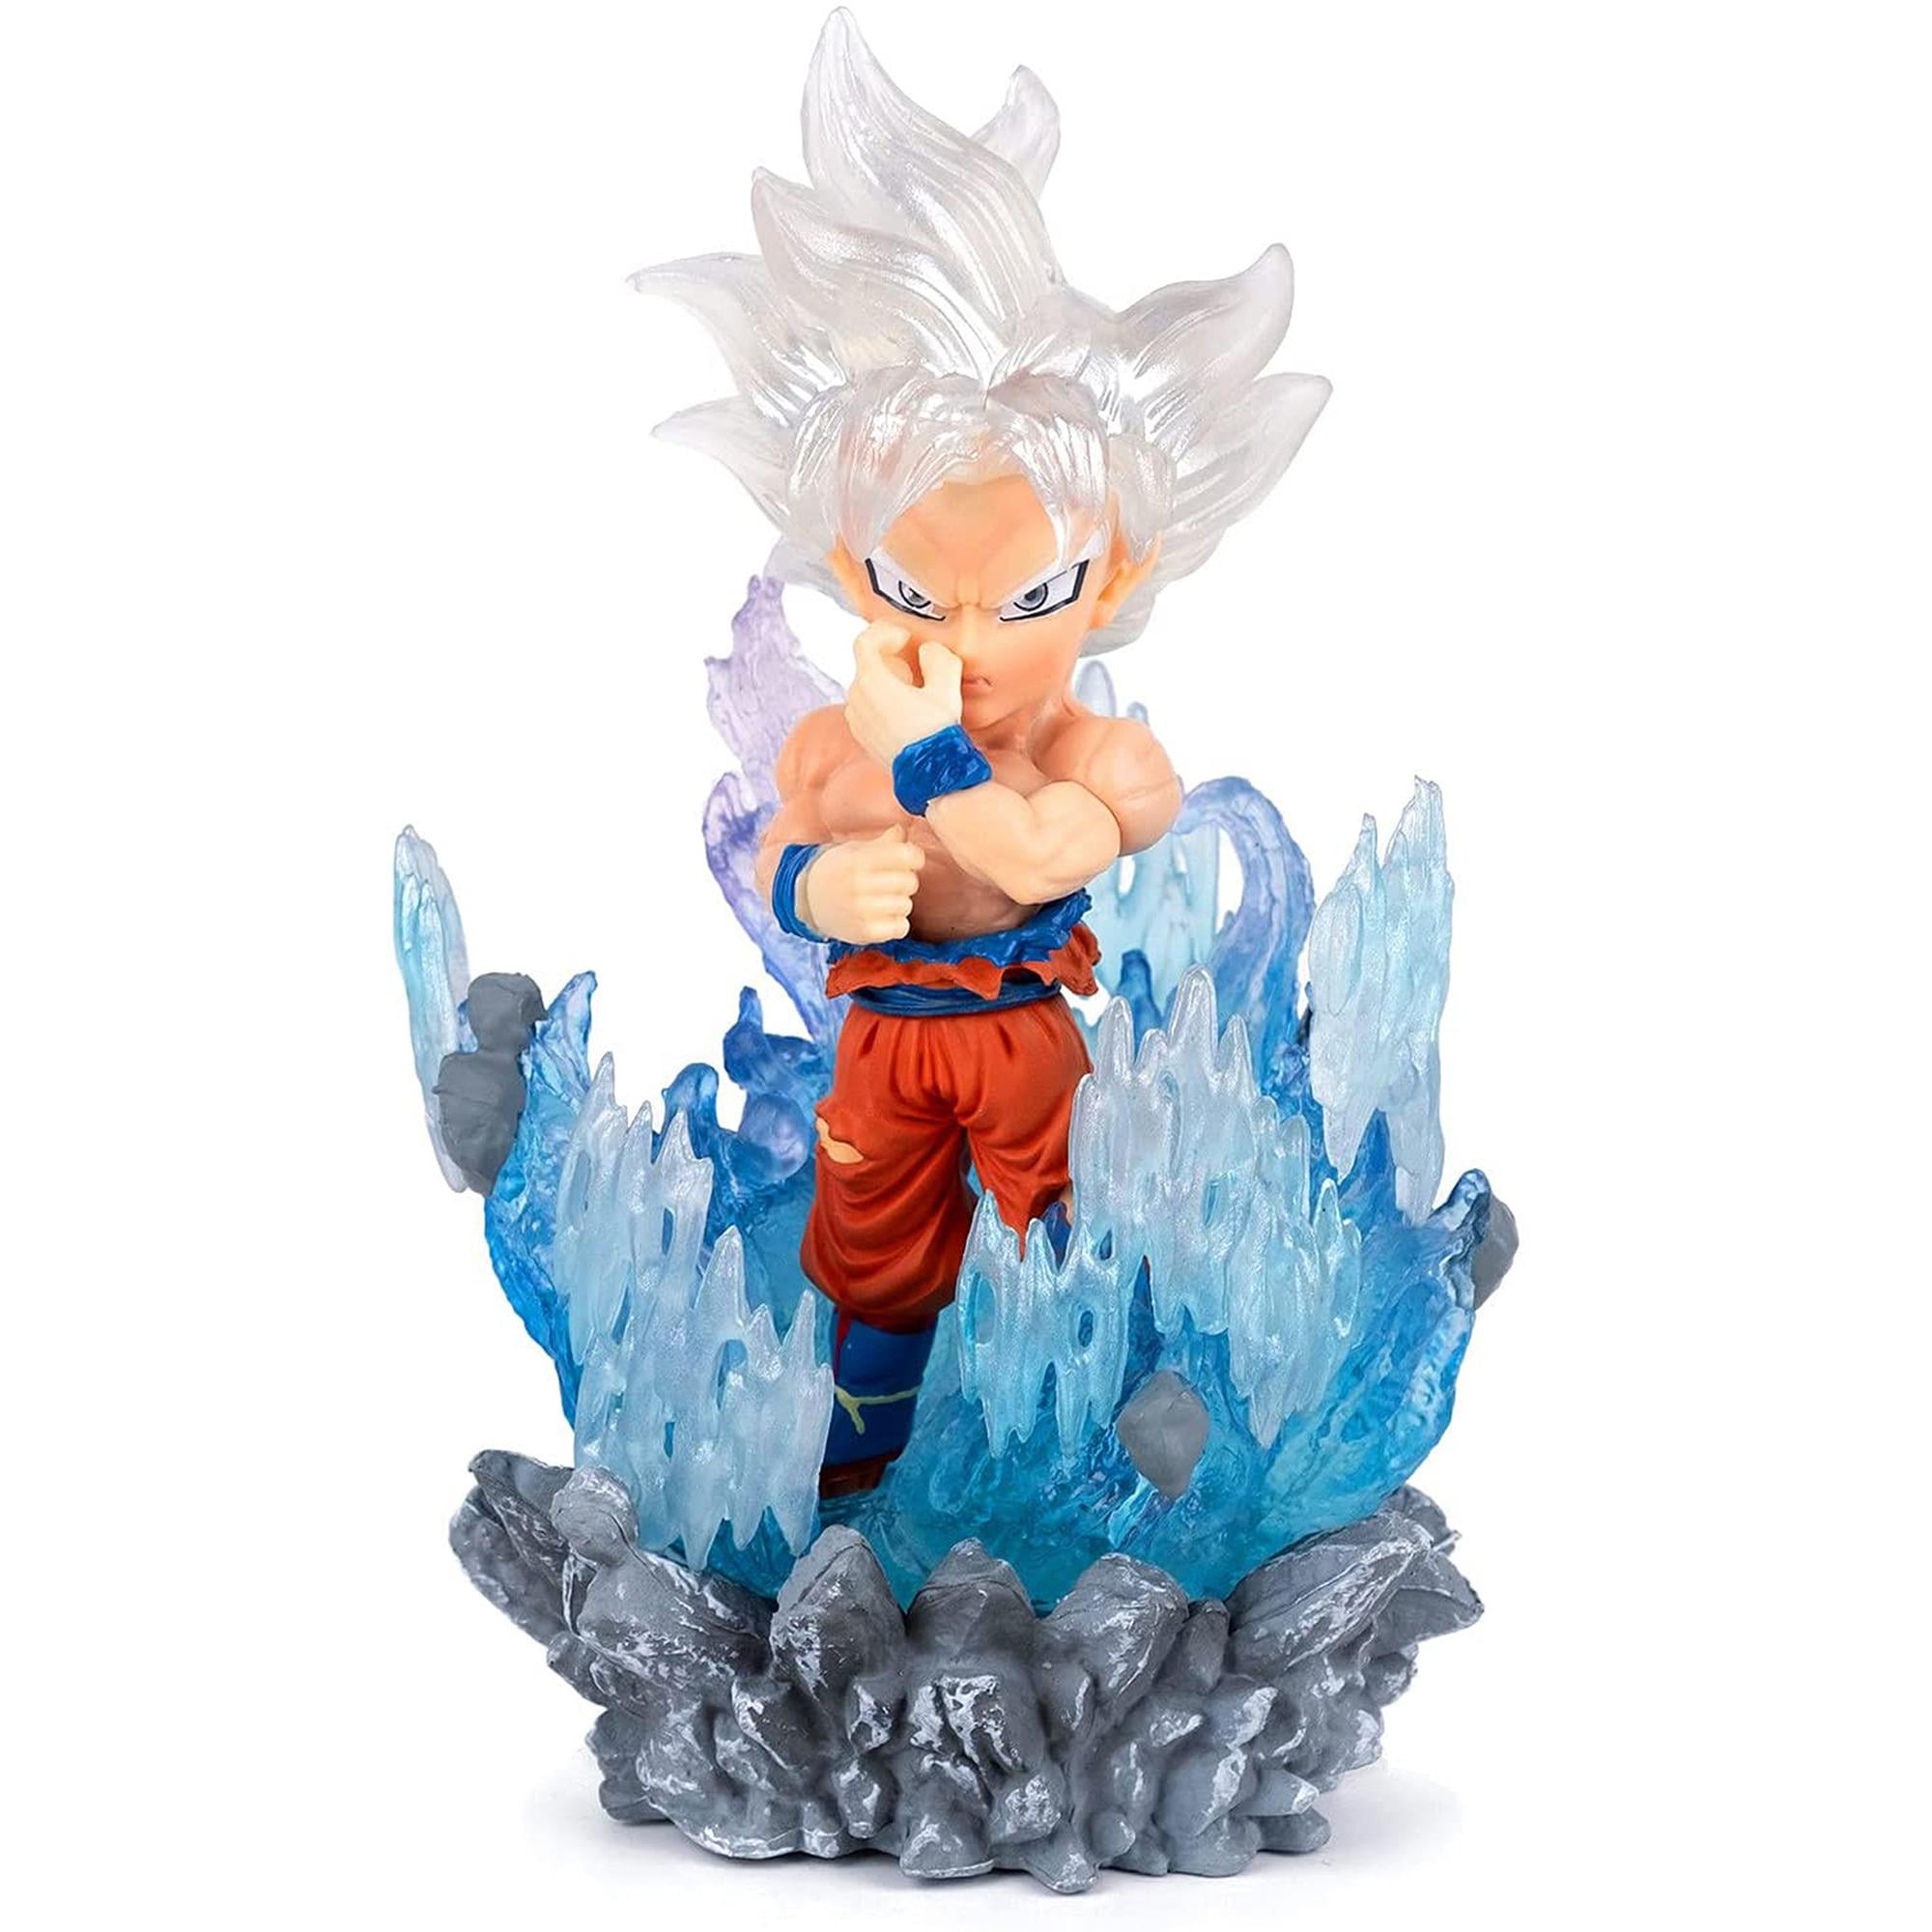 Ultra Instinct Goku Figure Statues Figurine Gk Super Saiyan Collection